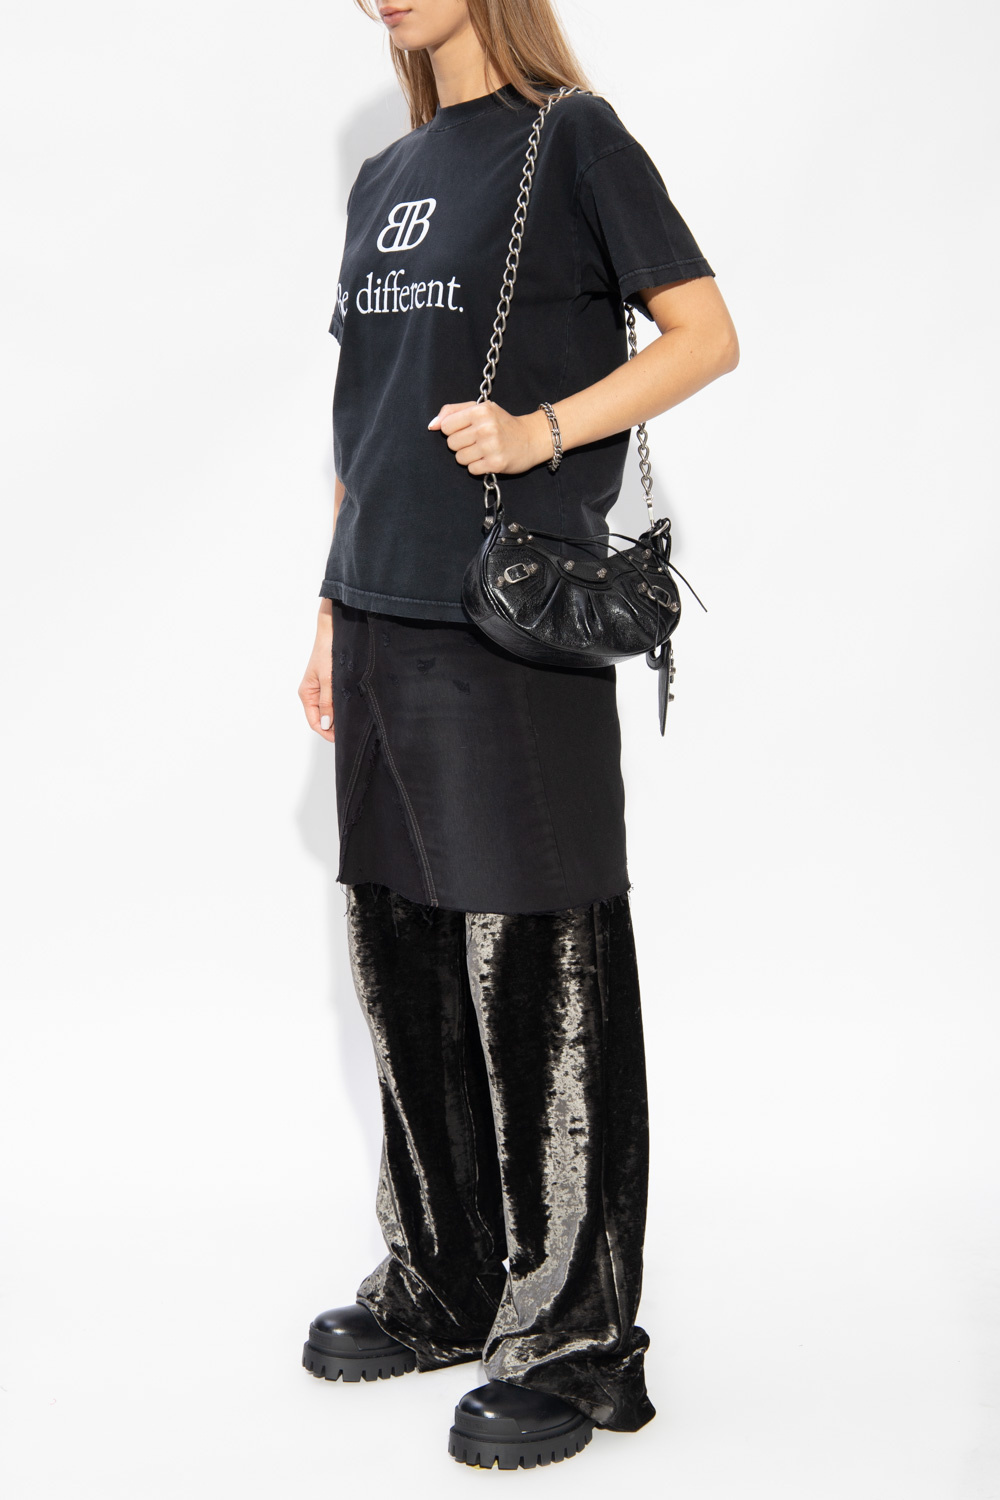 Balenciaga T-shirt Leffort Pro 3D cinzento preto mulher